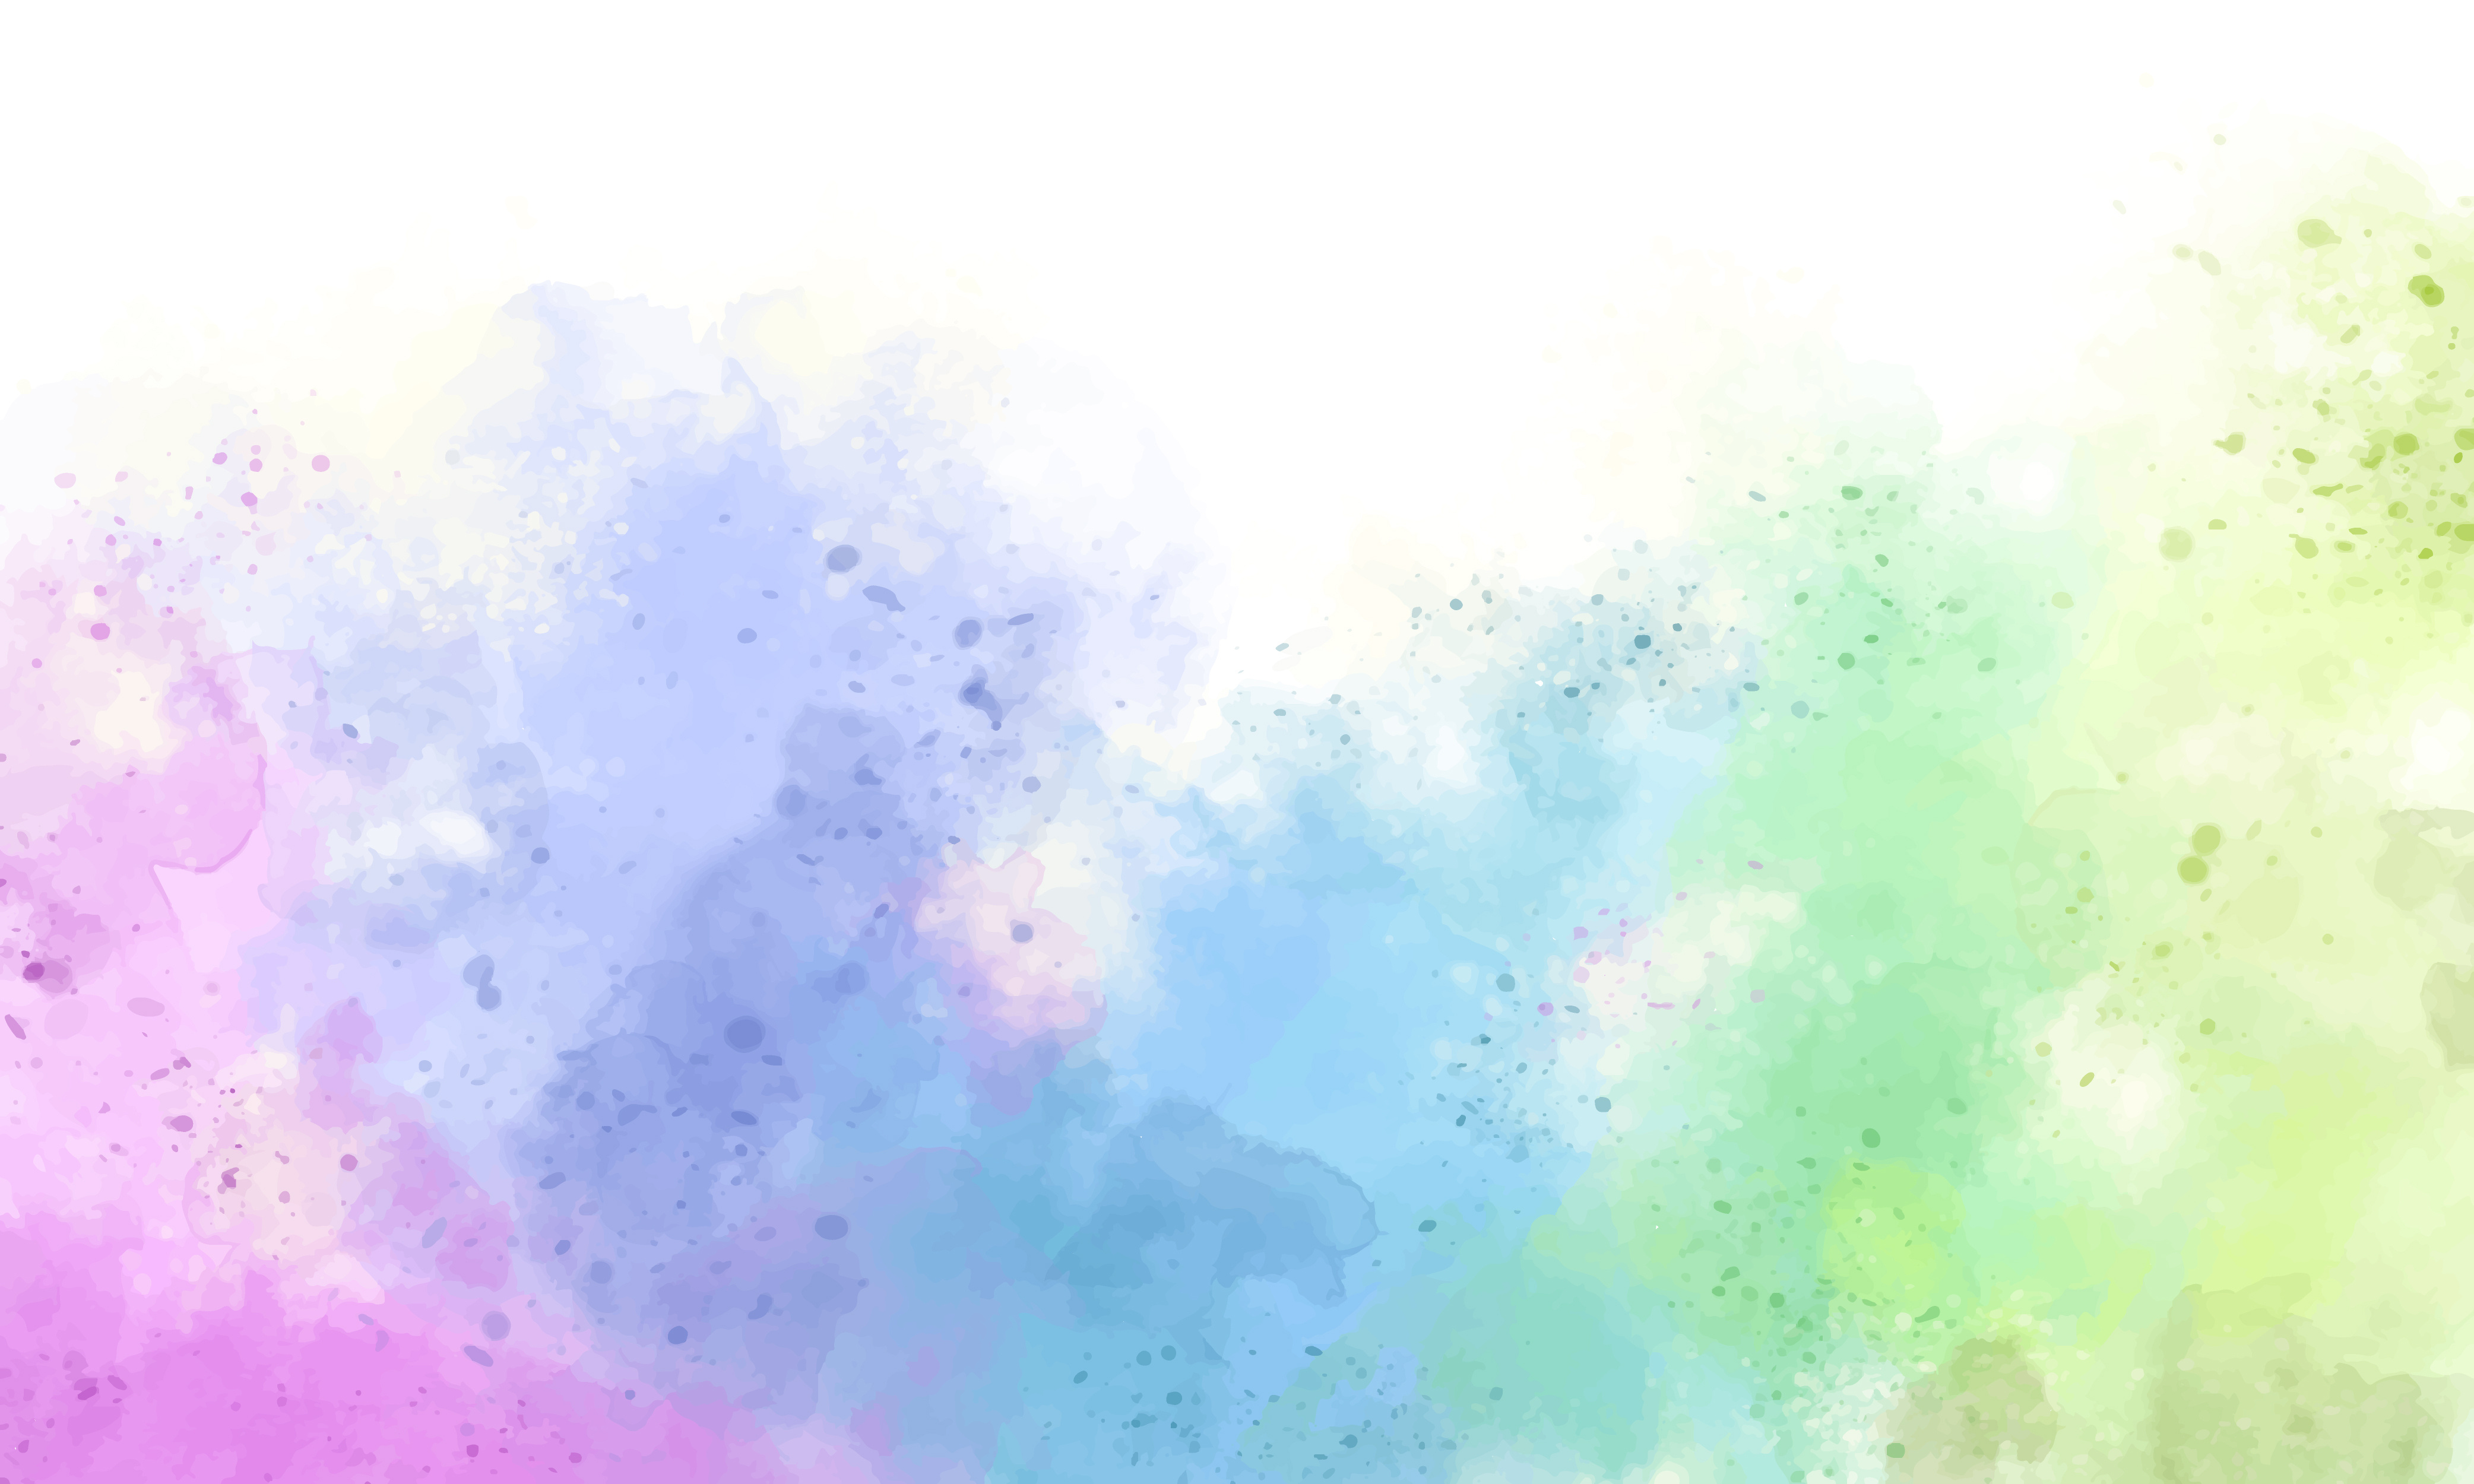 Rainbow of stain splash watercolor background